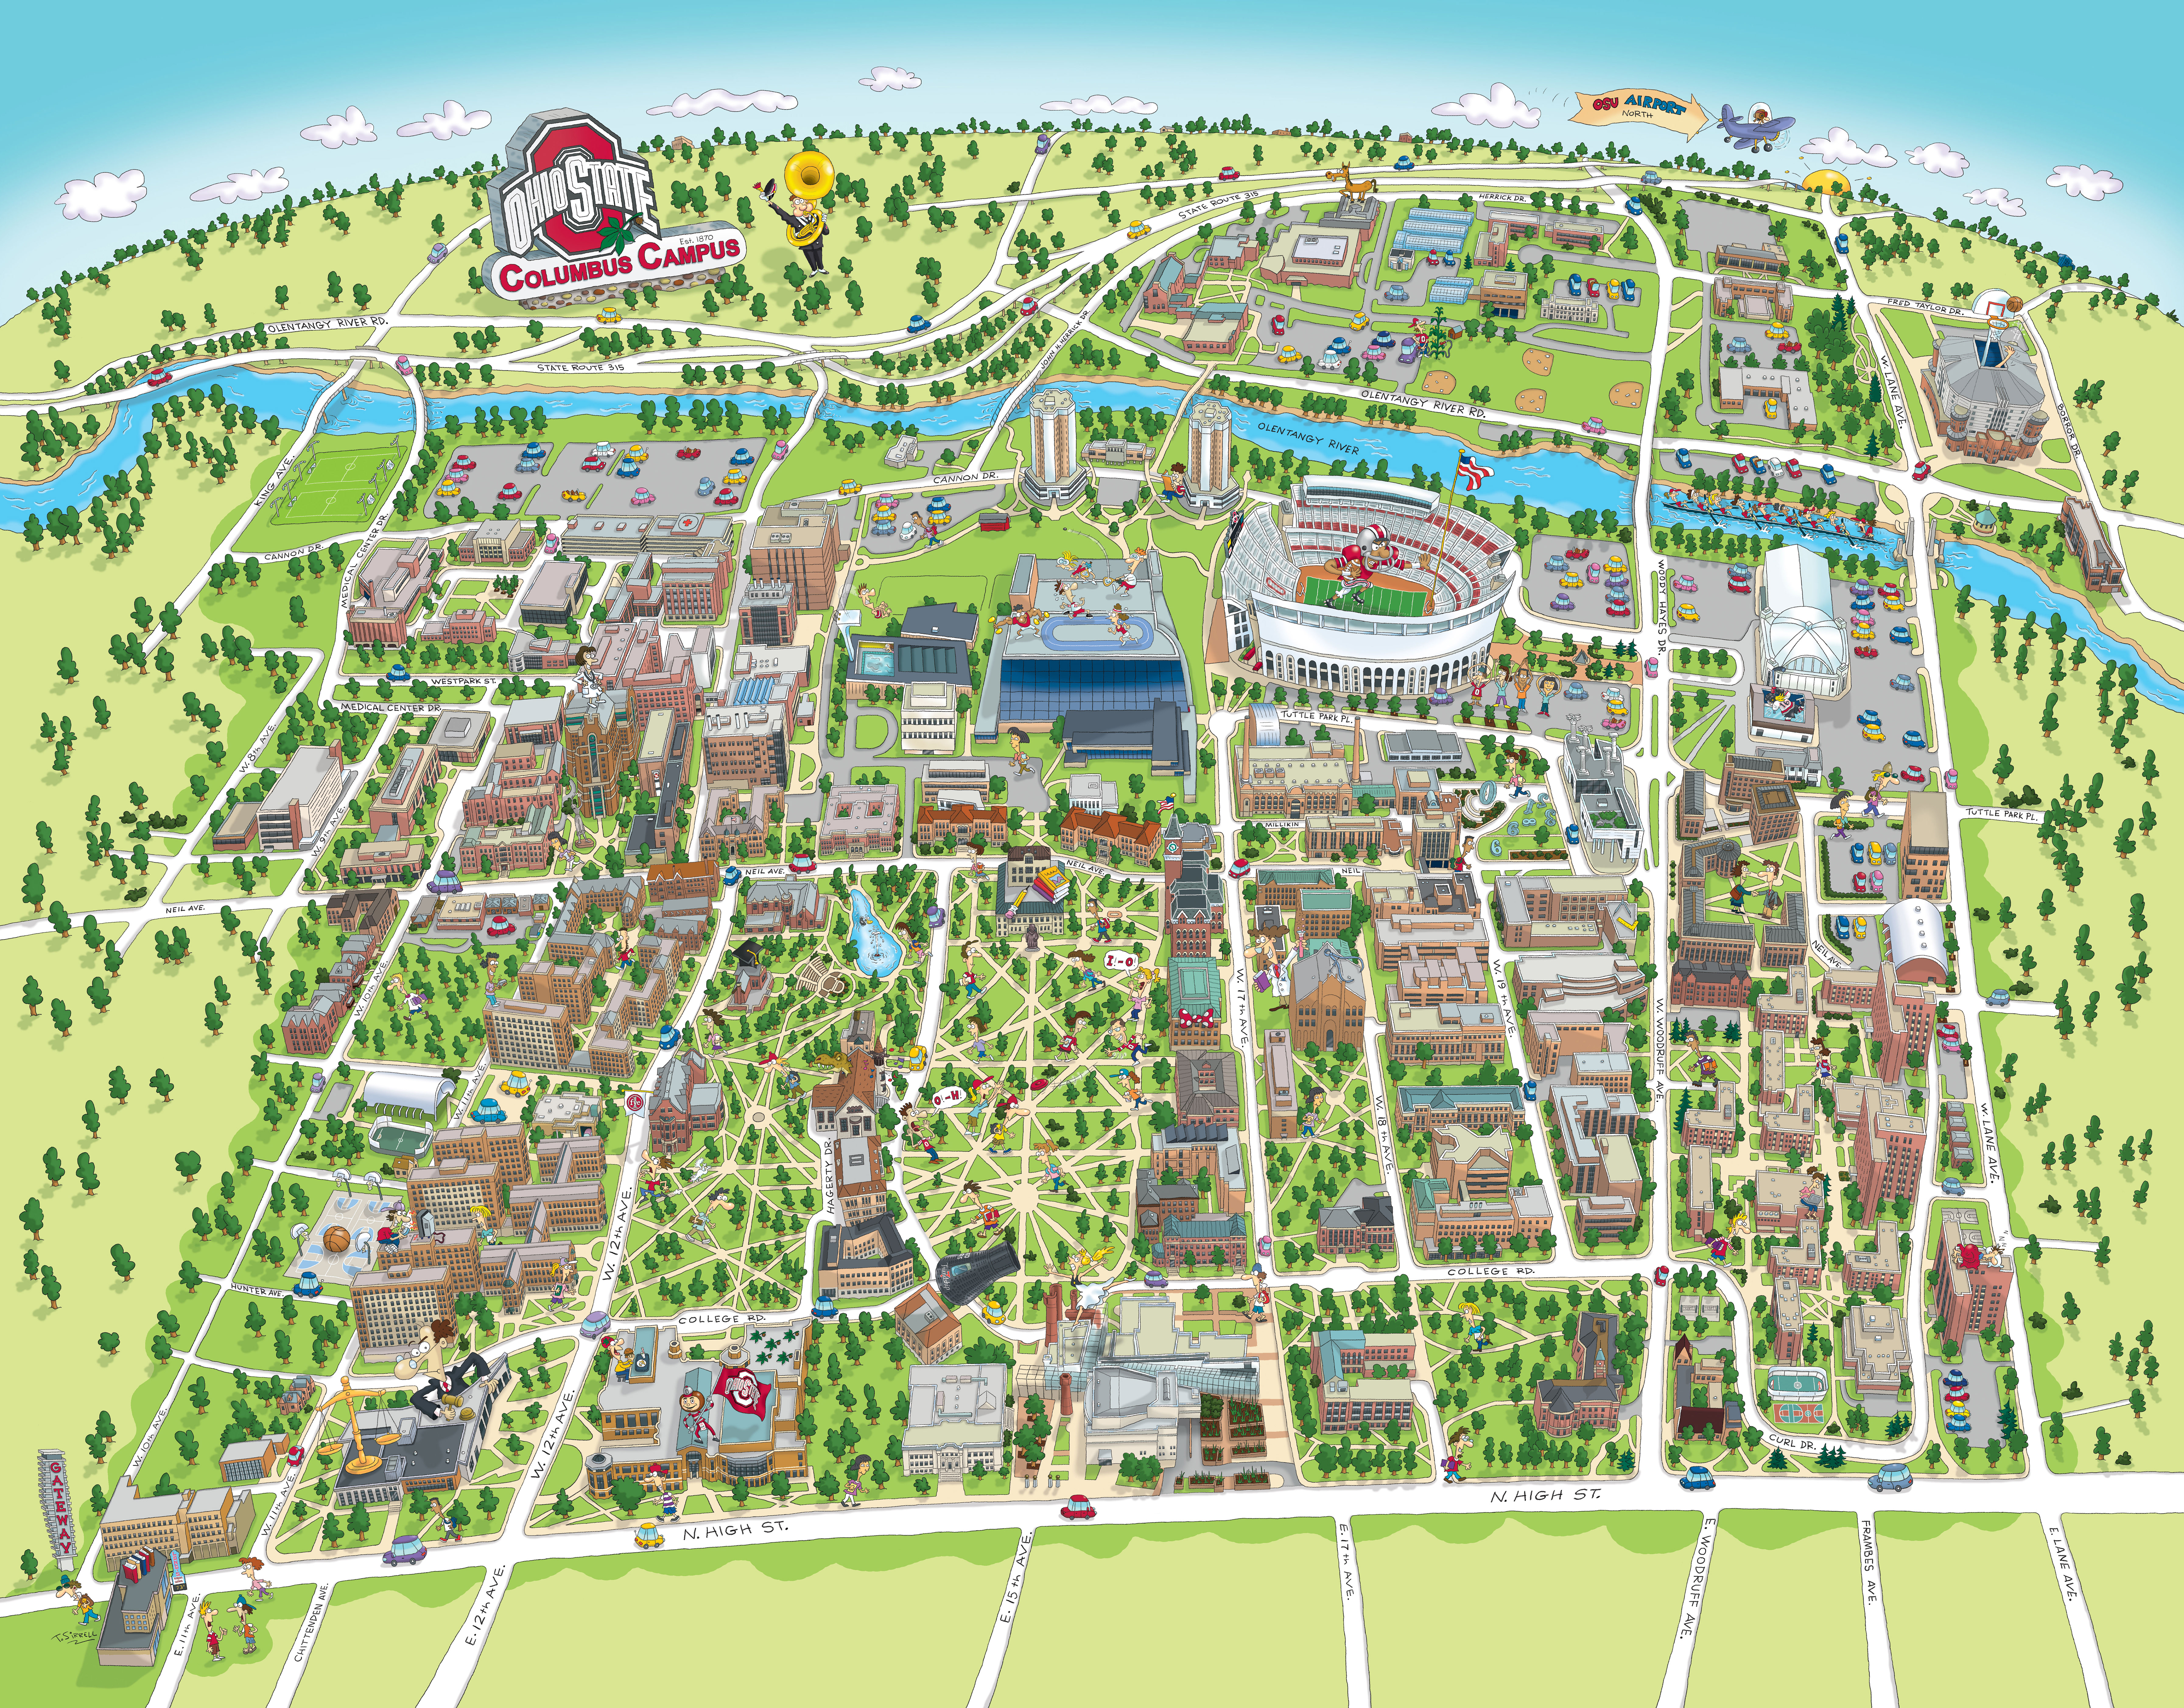 Ohio State University Campus Map Art - City Prints